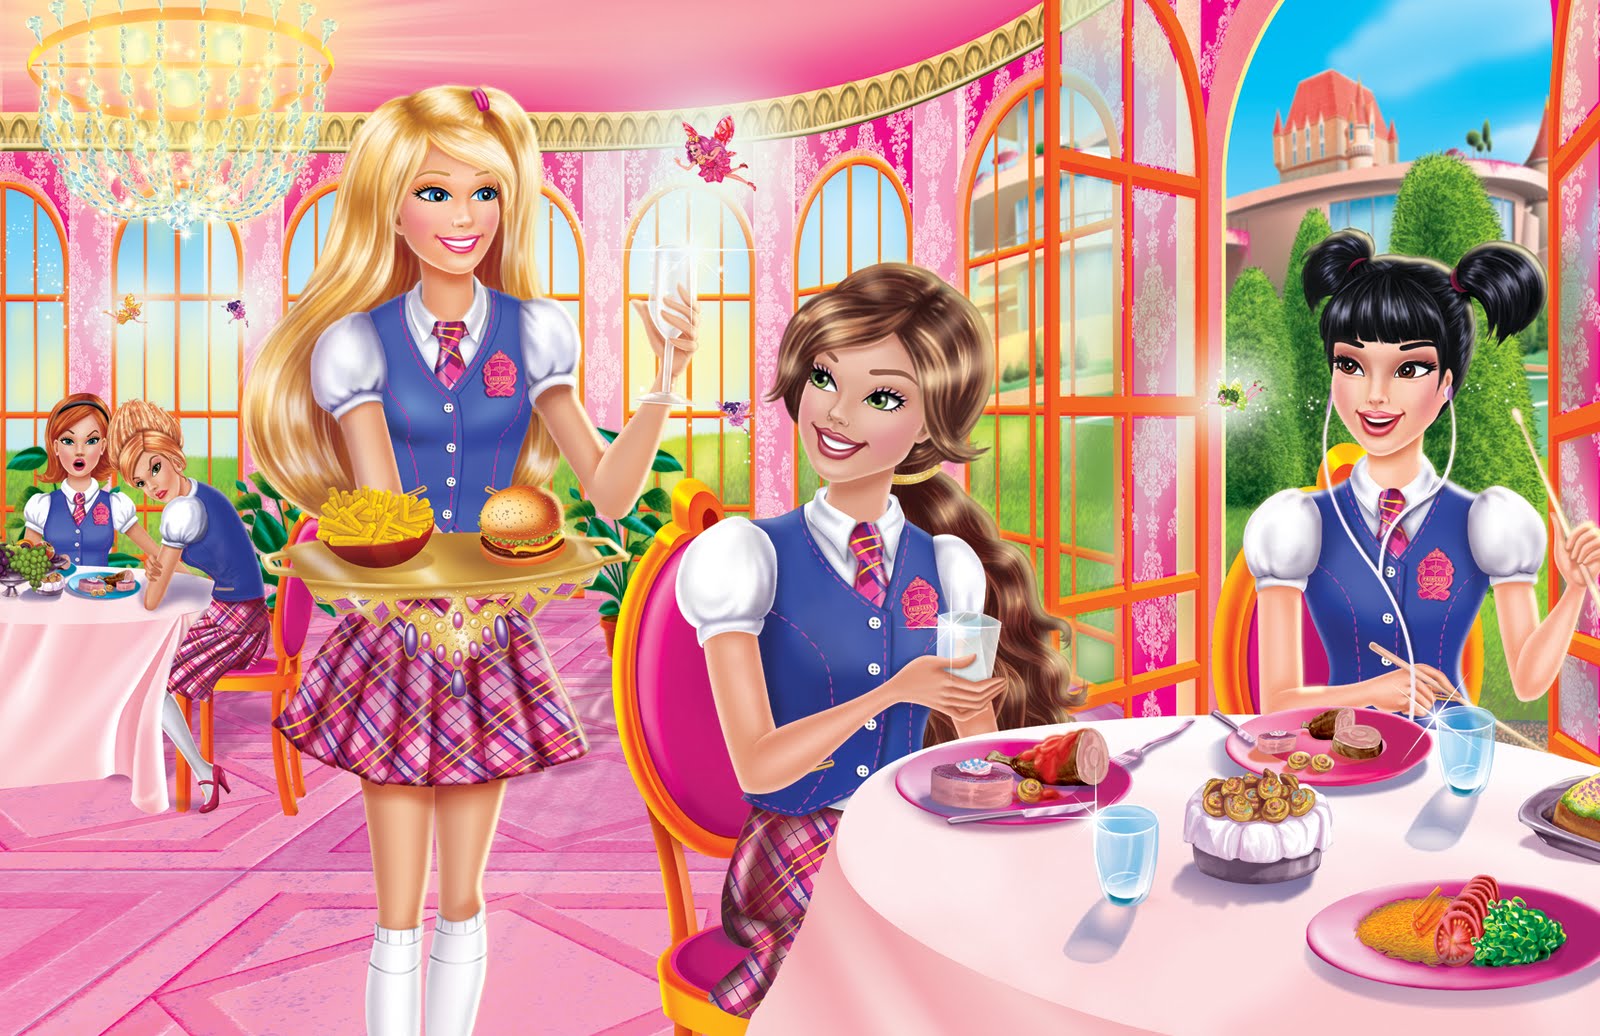 princess charm school full movie online